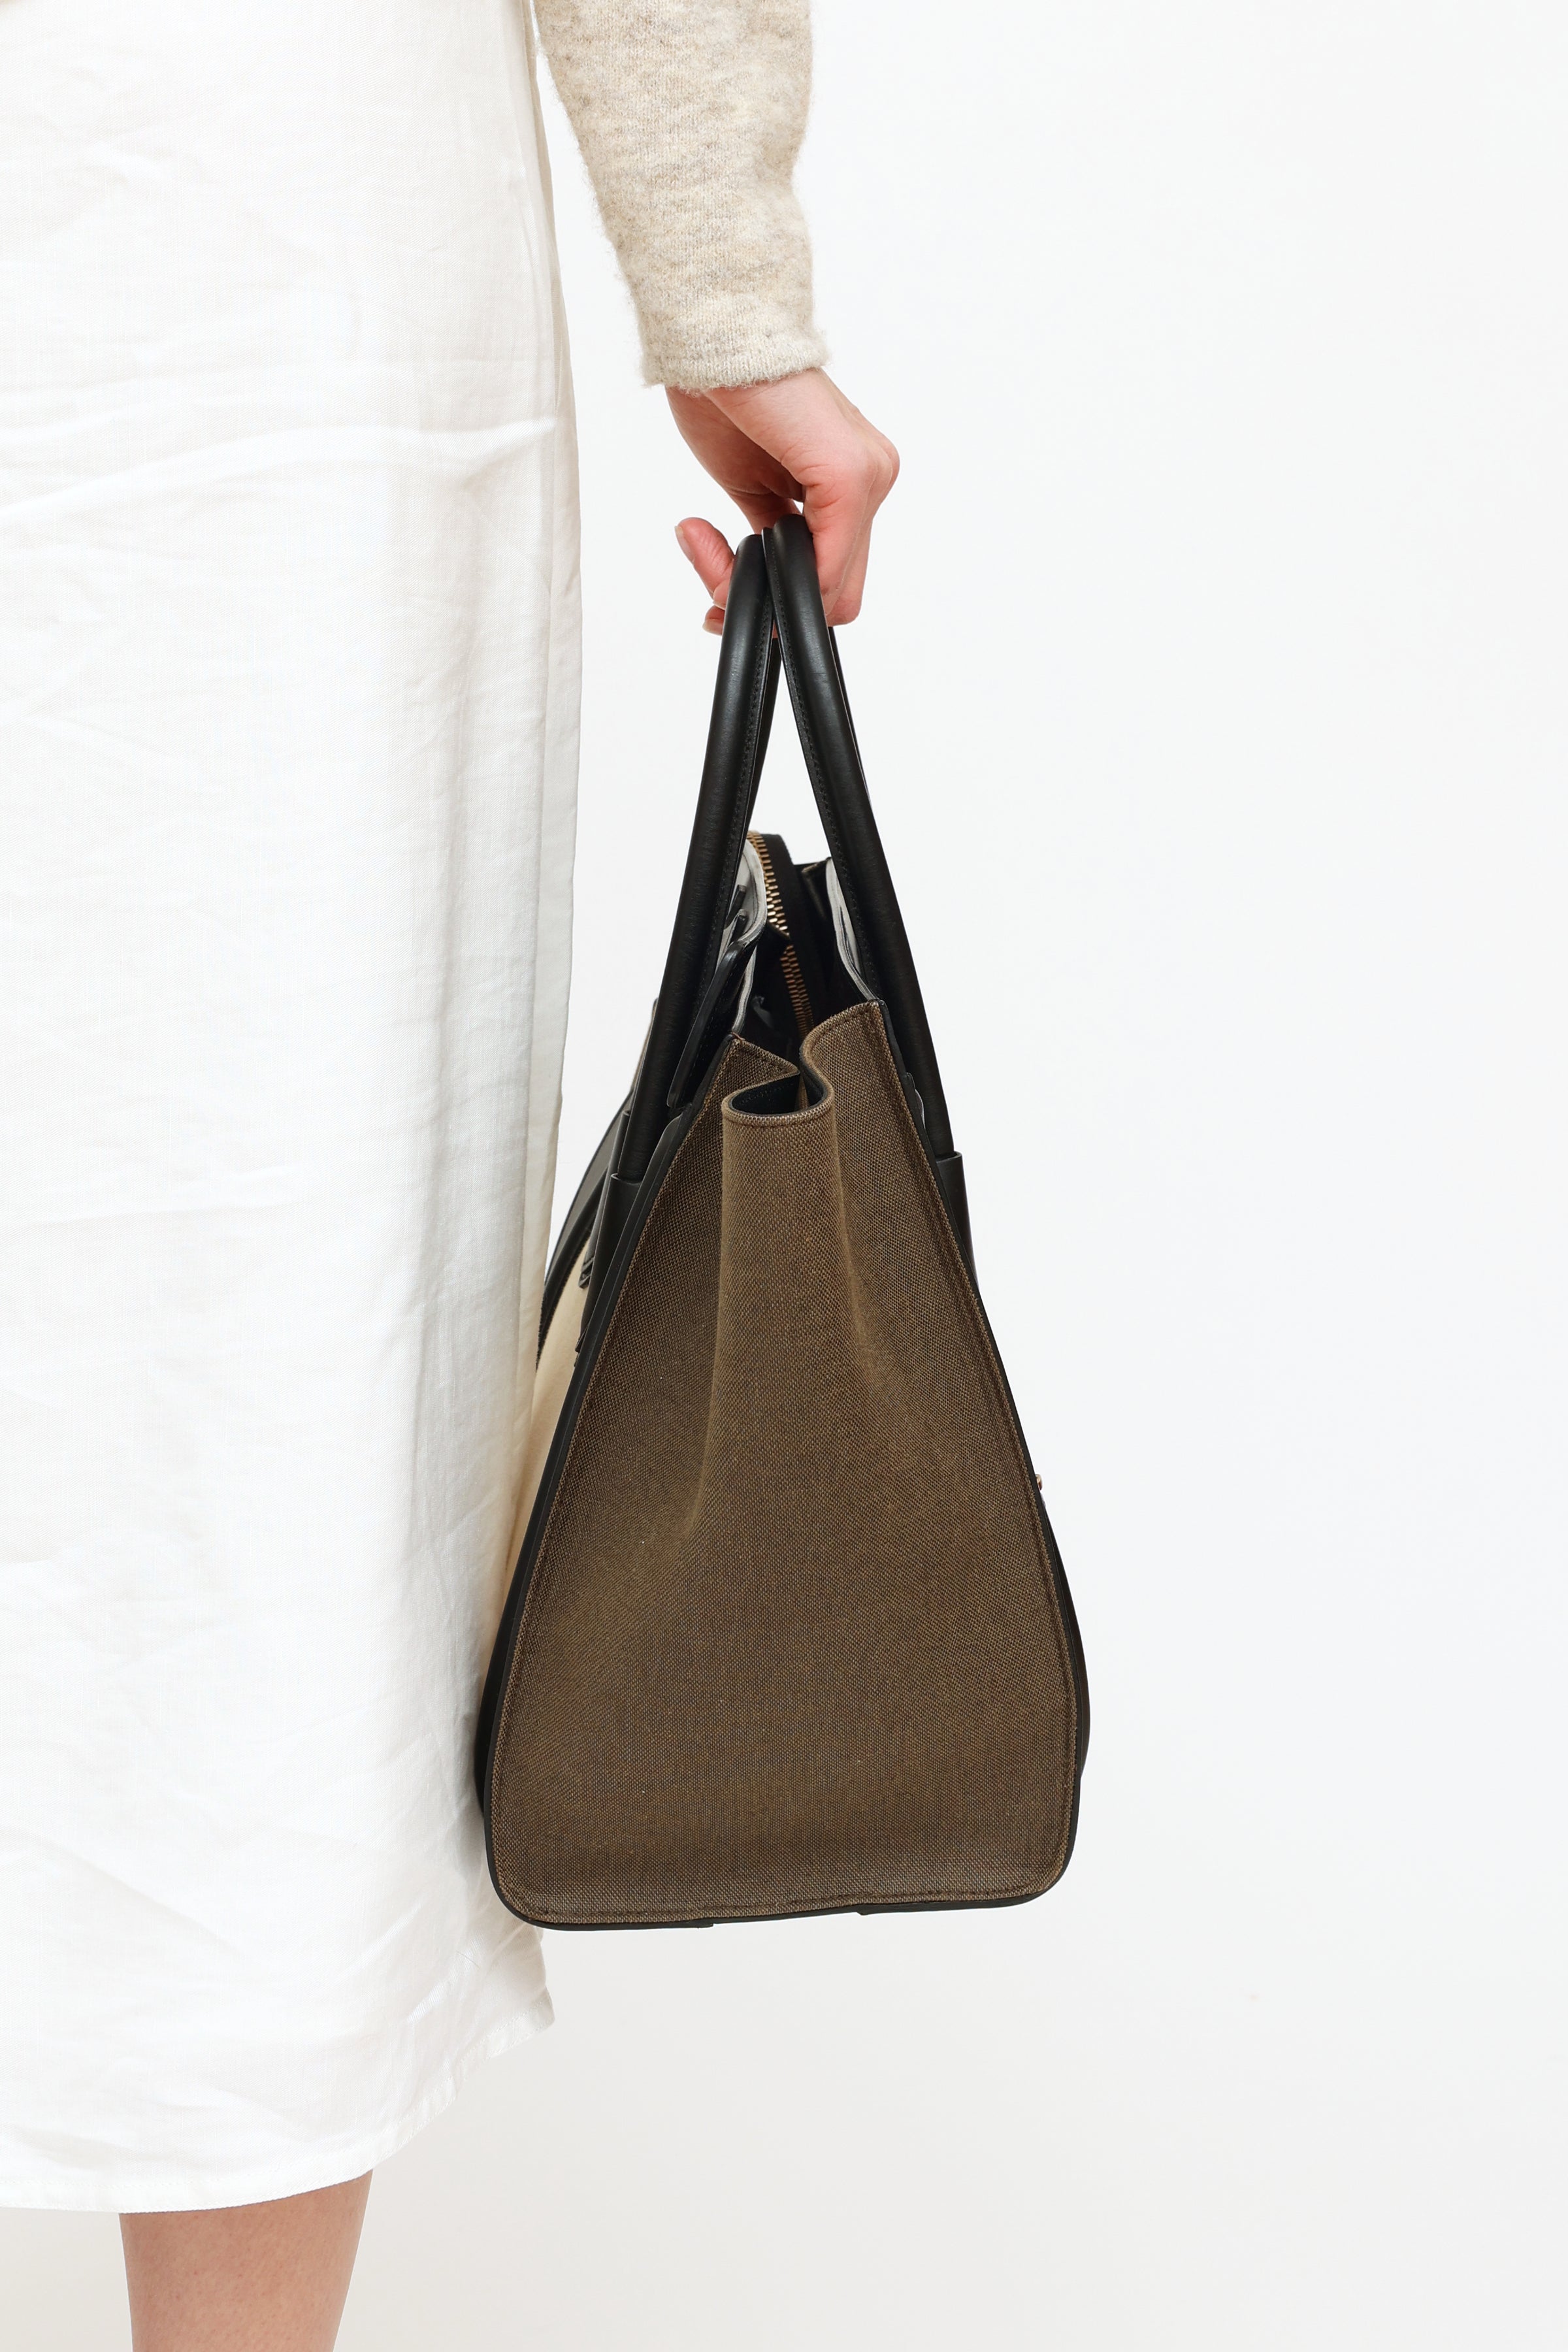 Hottest handbag of the year – Celine Luggage Tote | Fab Fashion Fix